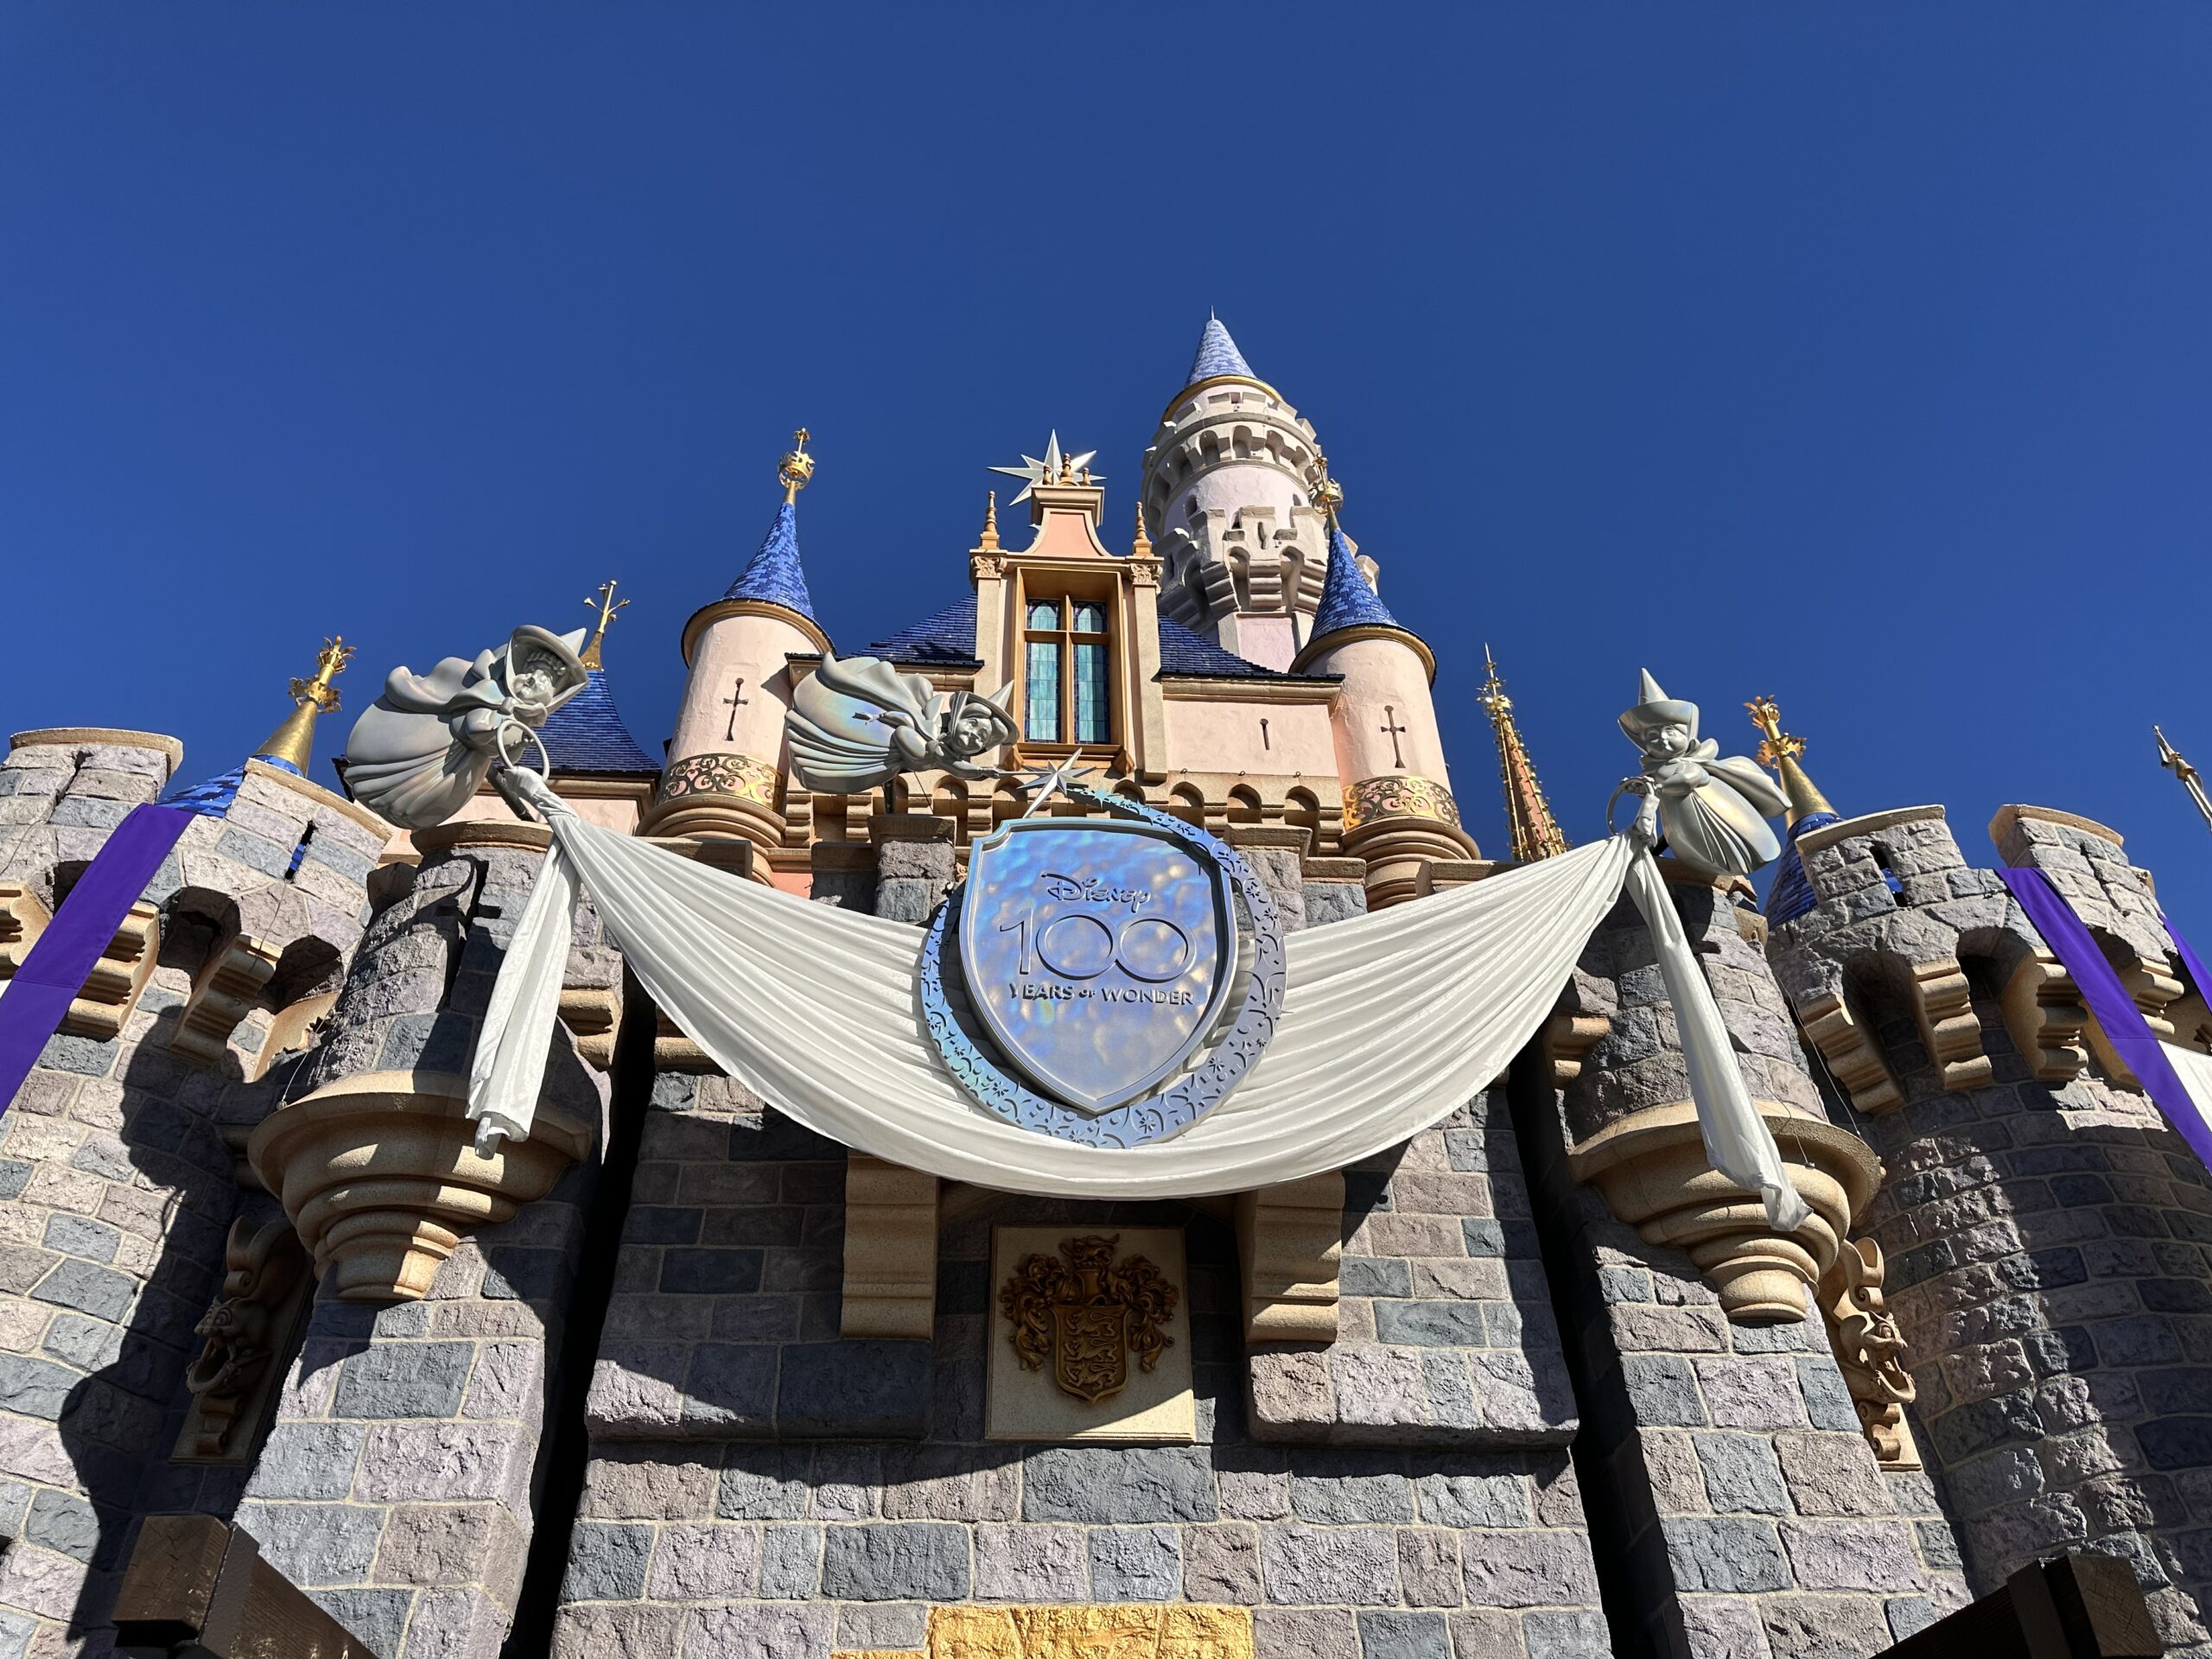 Disney-castle-100-anniversary